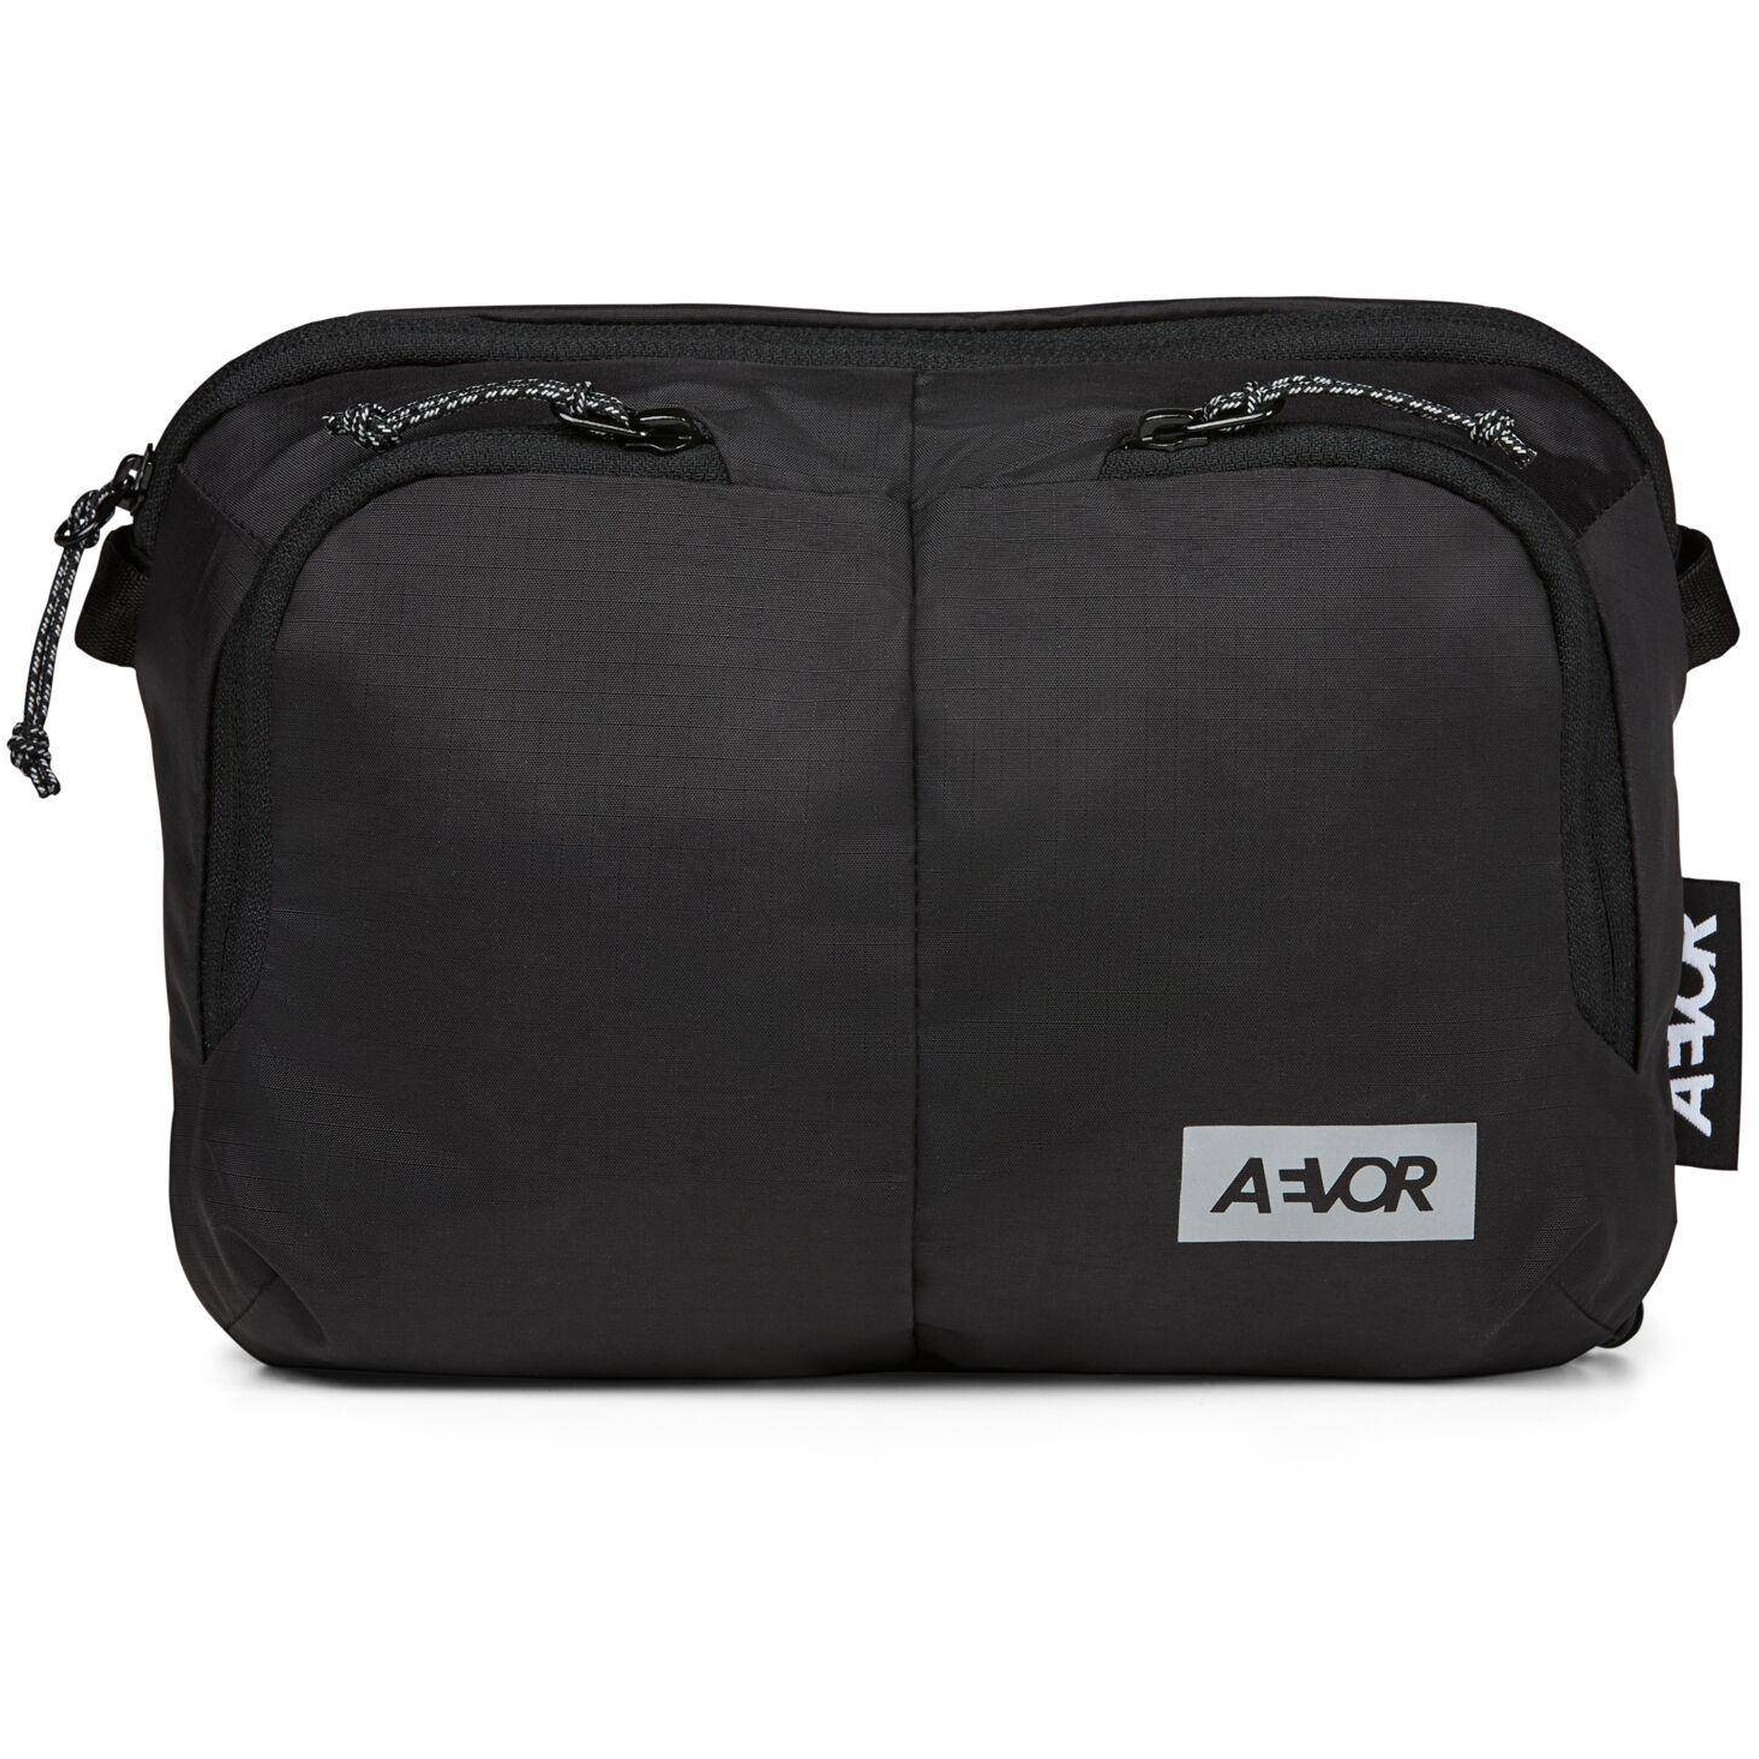 Picture of AEVOR Sacoche Bag - Ripstop Black